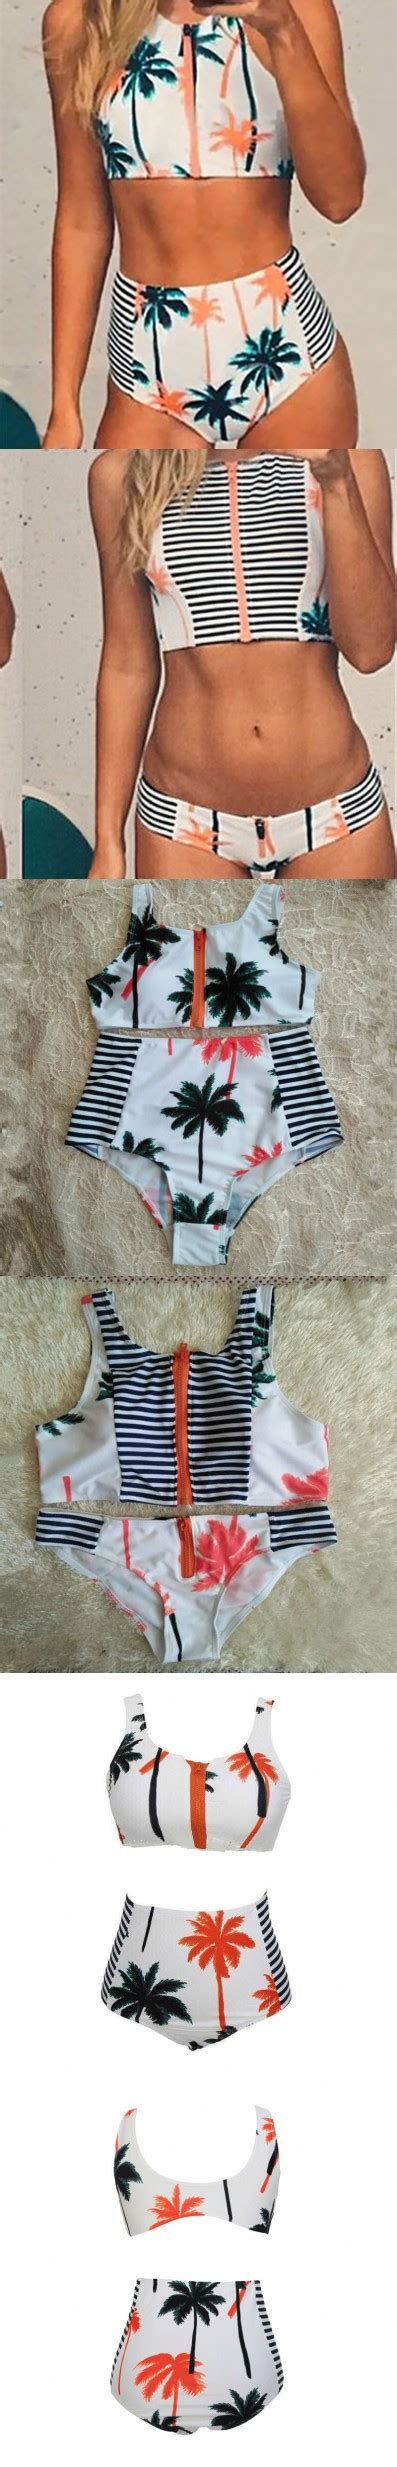 New Women Vintage Floral Palm Tree Print Bikini Sets High Neck